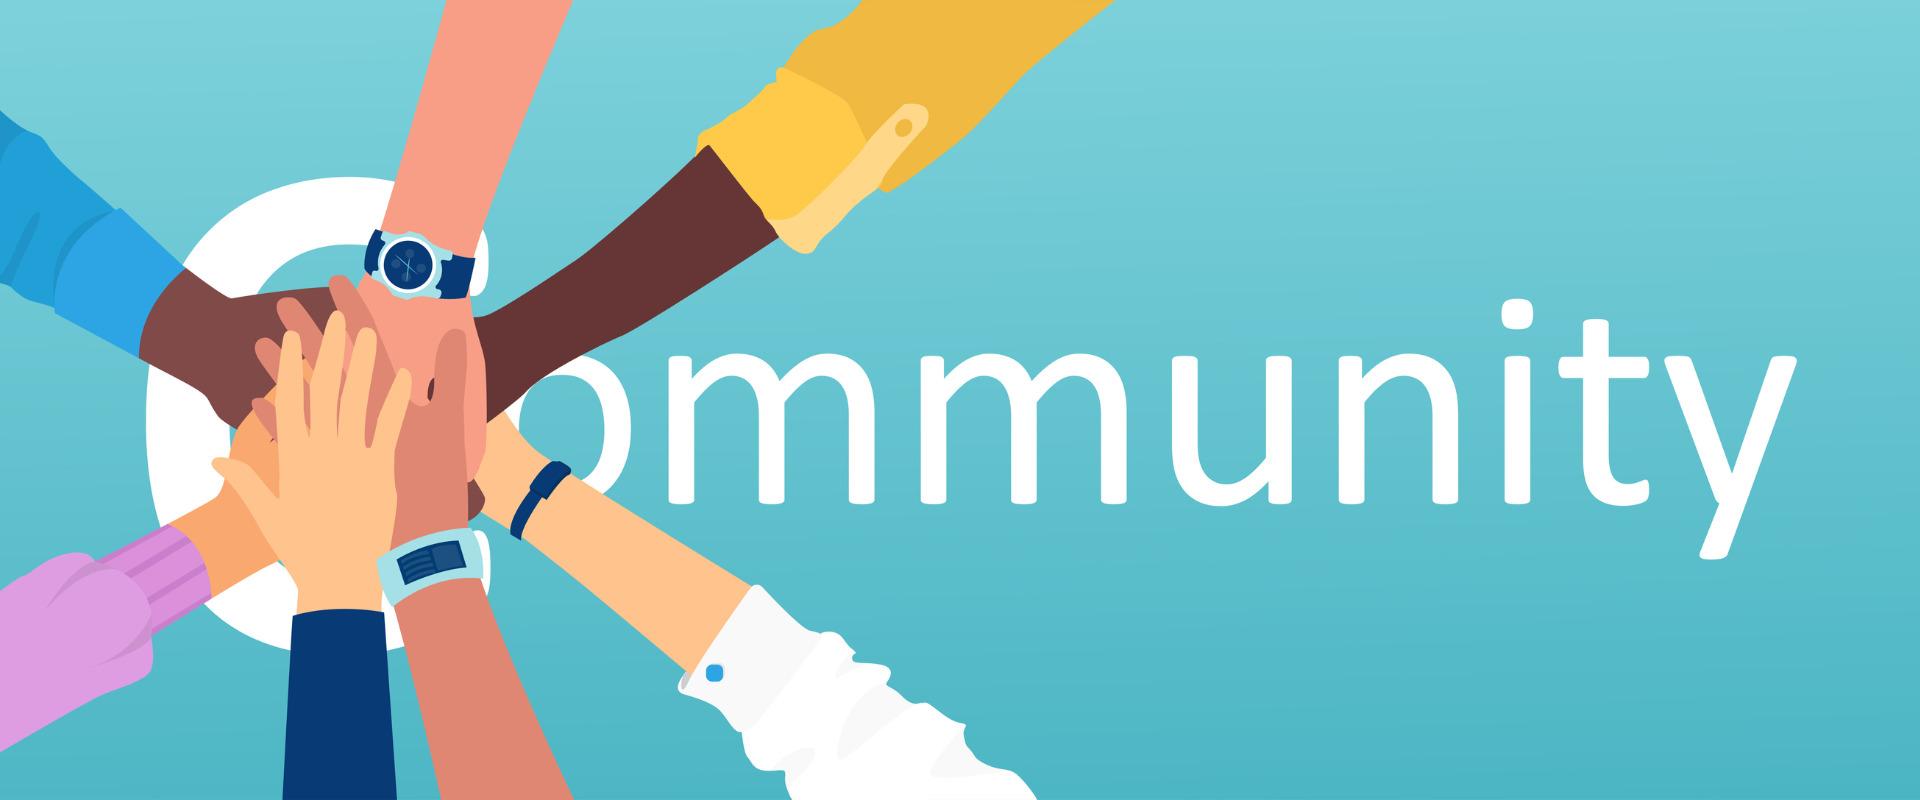 illustration of diverse group putting hands together over word "Community"